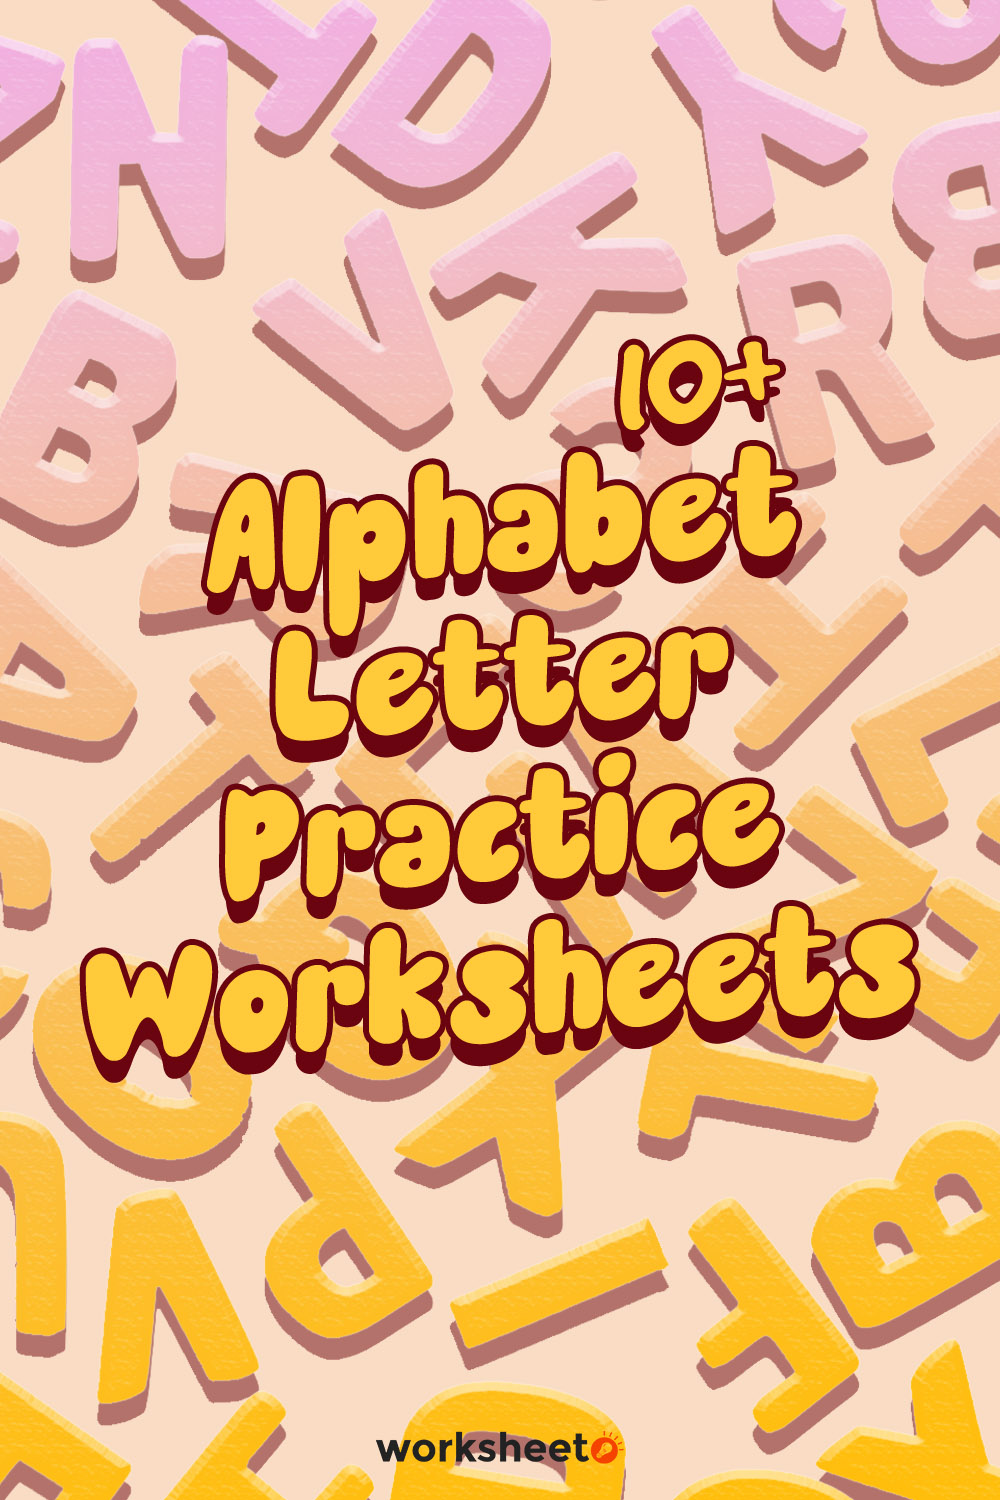 15 Images of Alphabet Letter Practice Worksheets